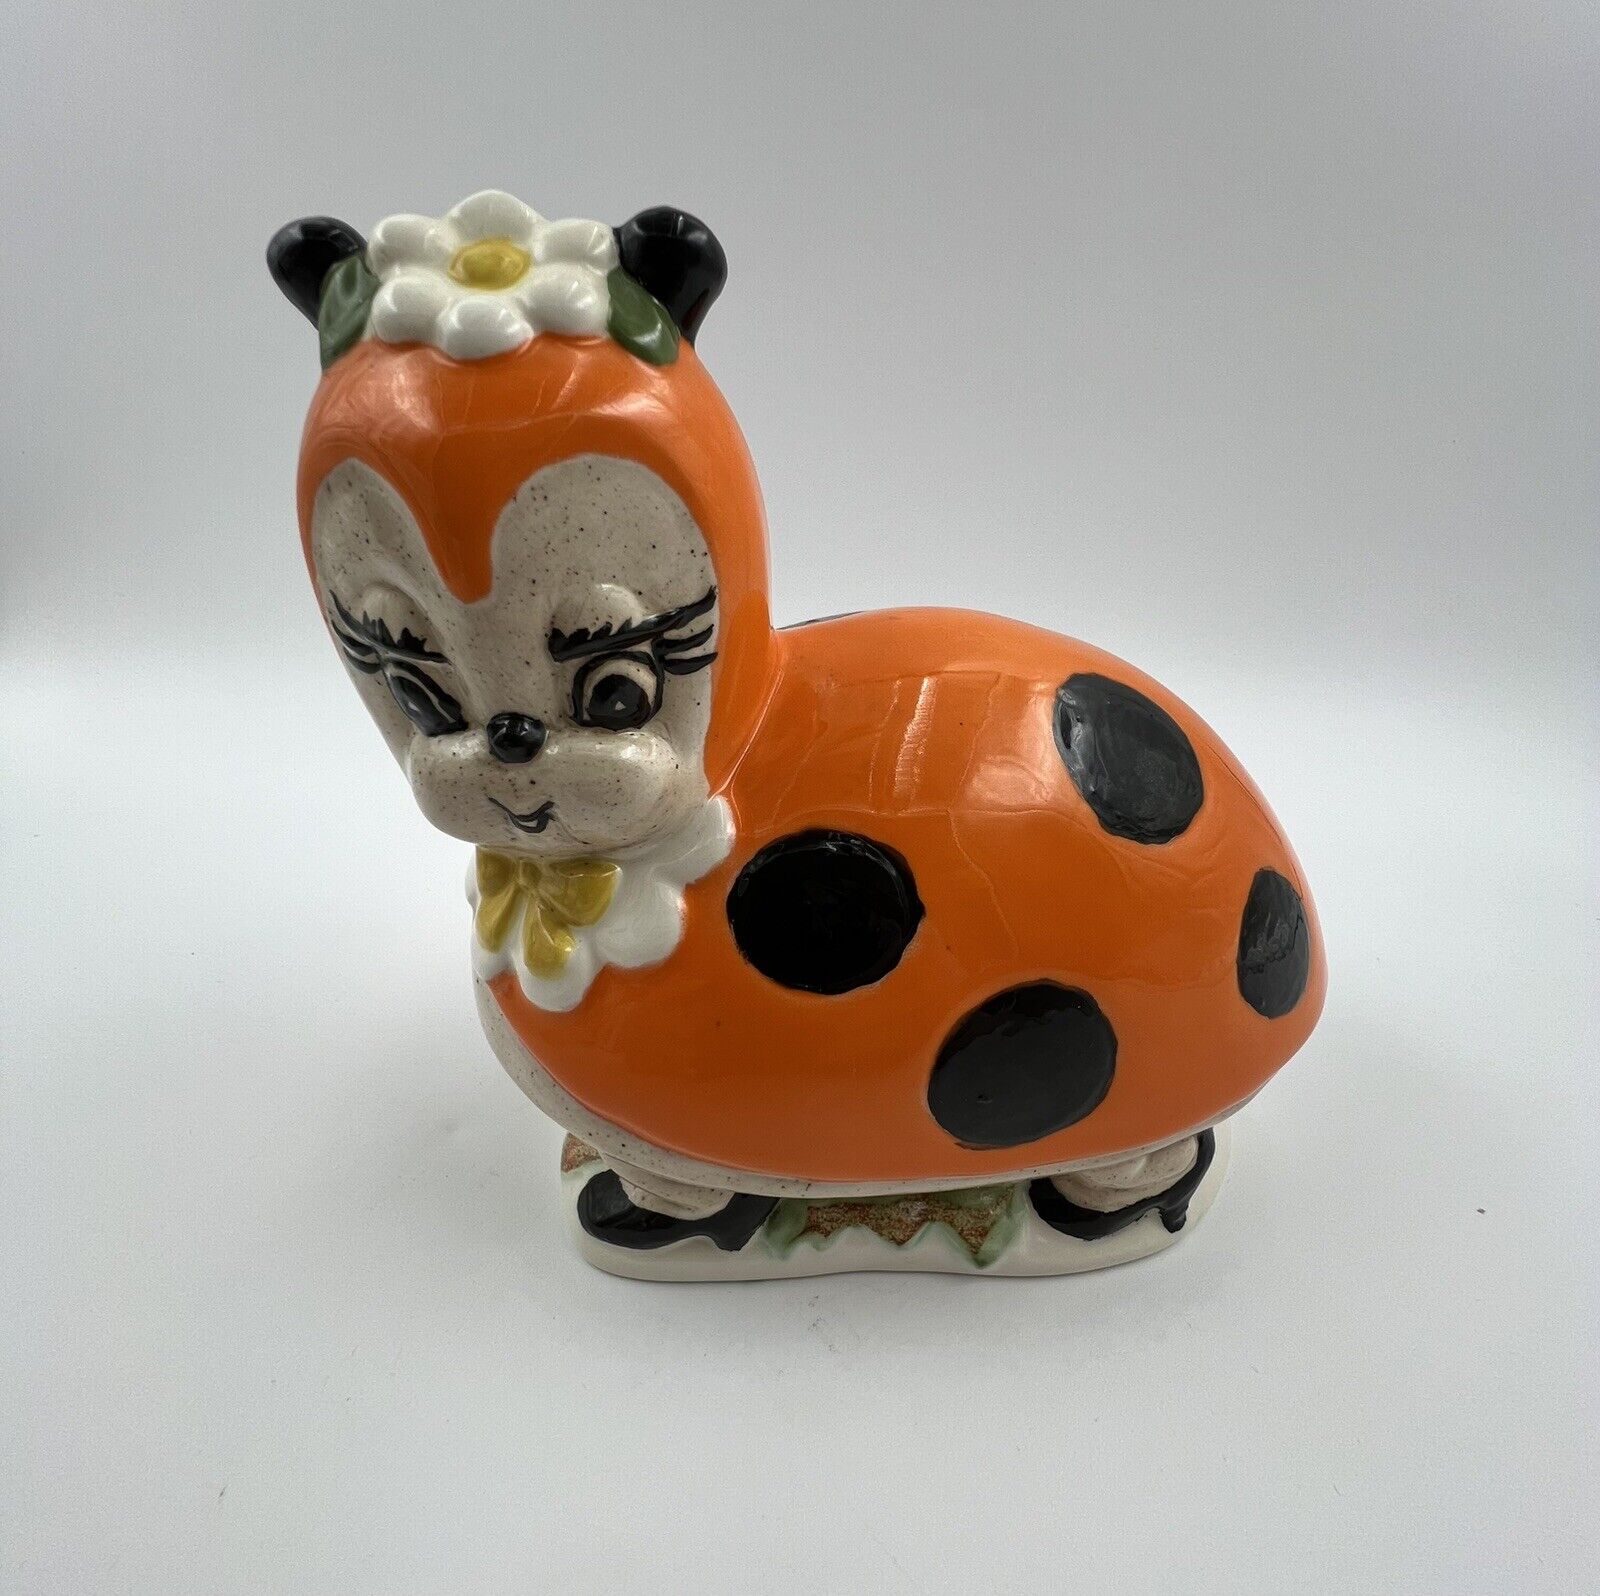 Vintage Ceramic Ladybug Figurine 1970s Anthropomorphic Orange